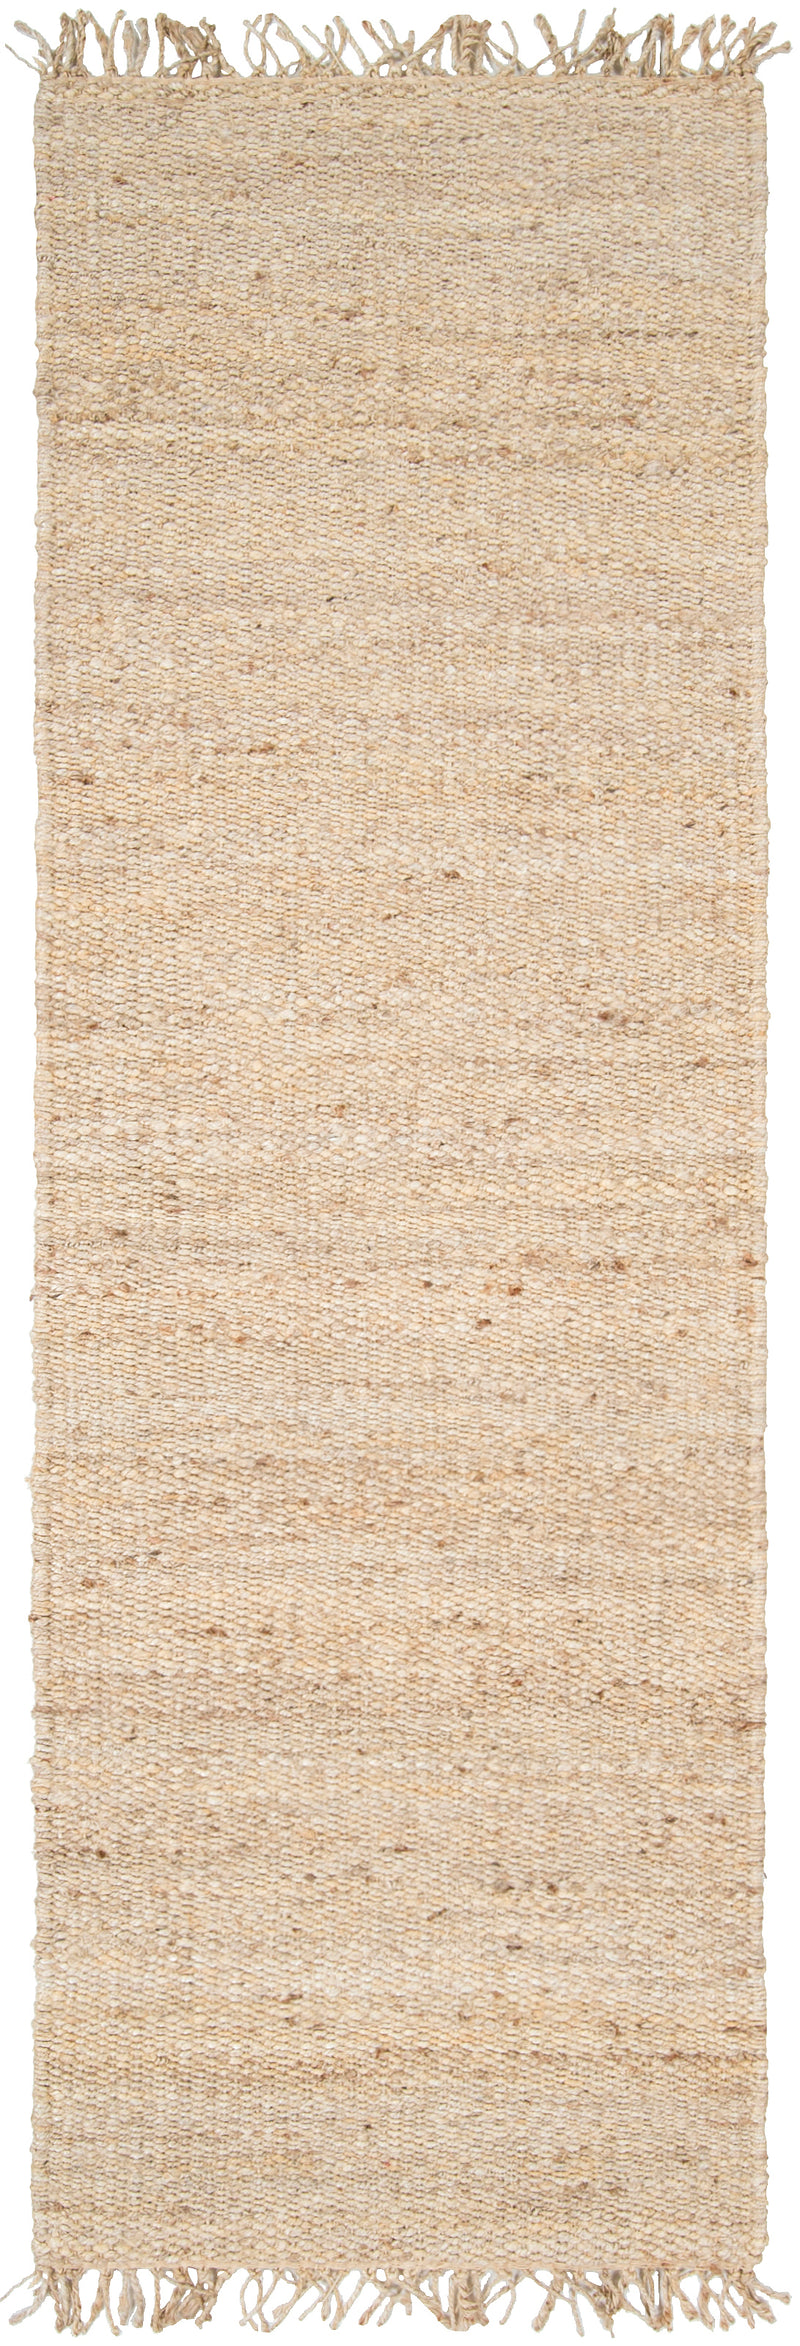 media image for jute rug design by surya 2 257